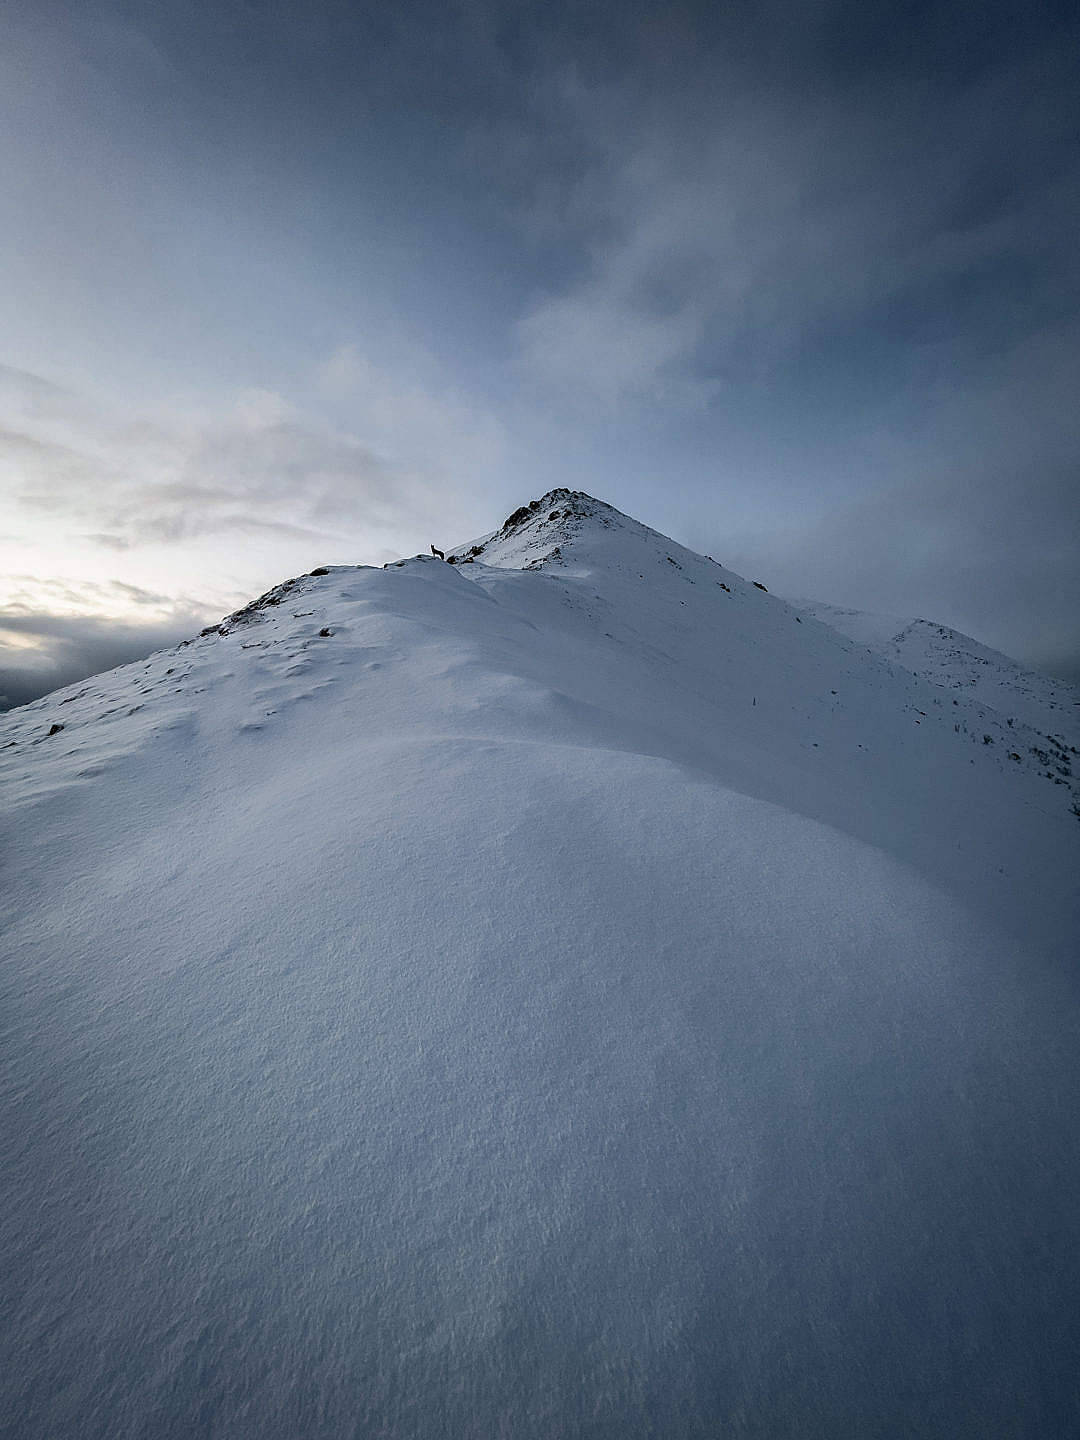 Snow-capped Hd Mountain Ridges Wallpaper